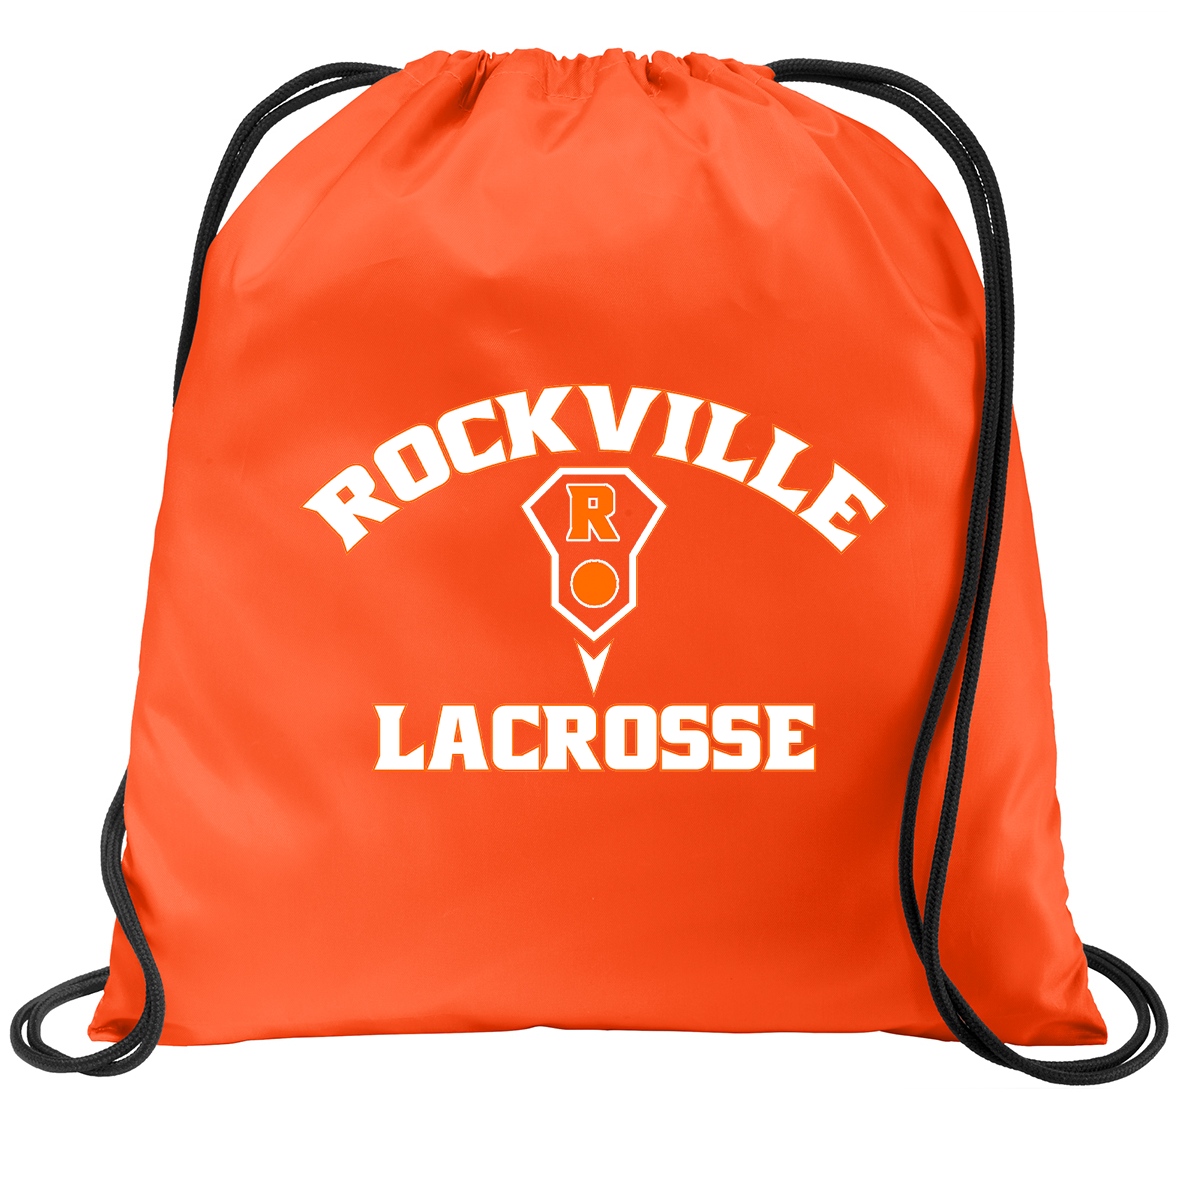 Rockville HS Girls Lacrosse Cinch Pack